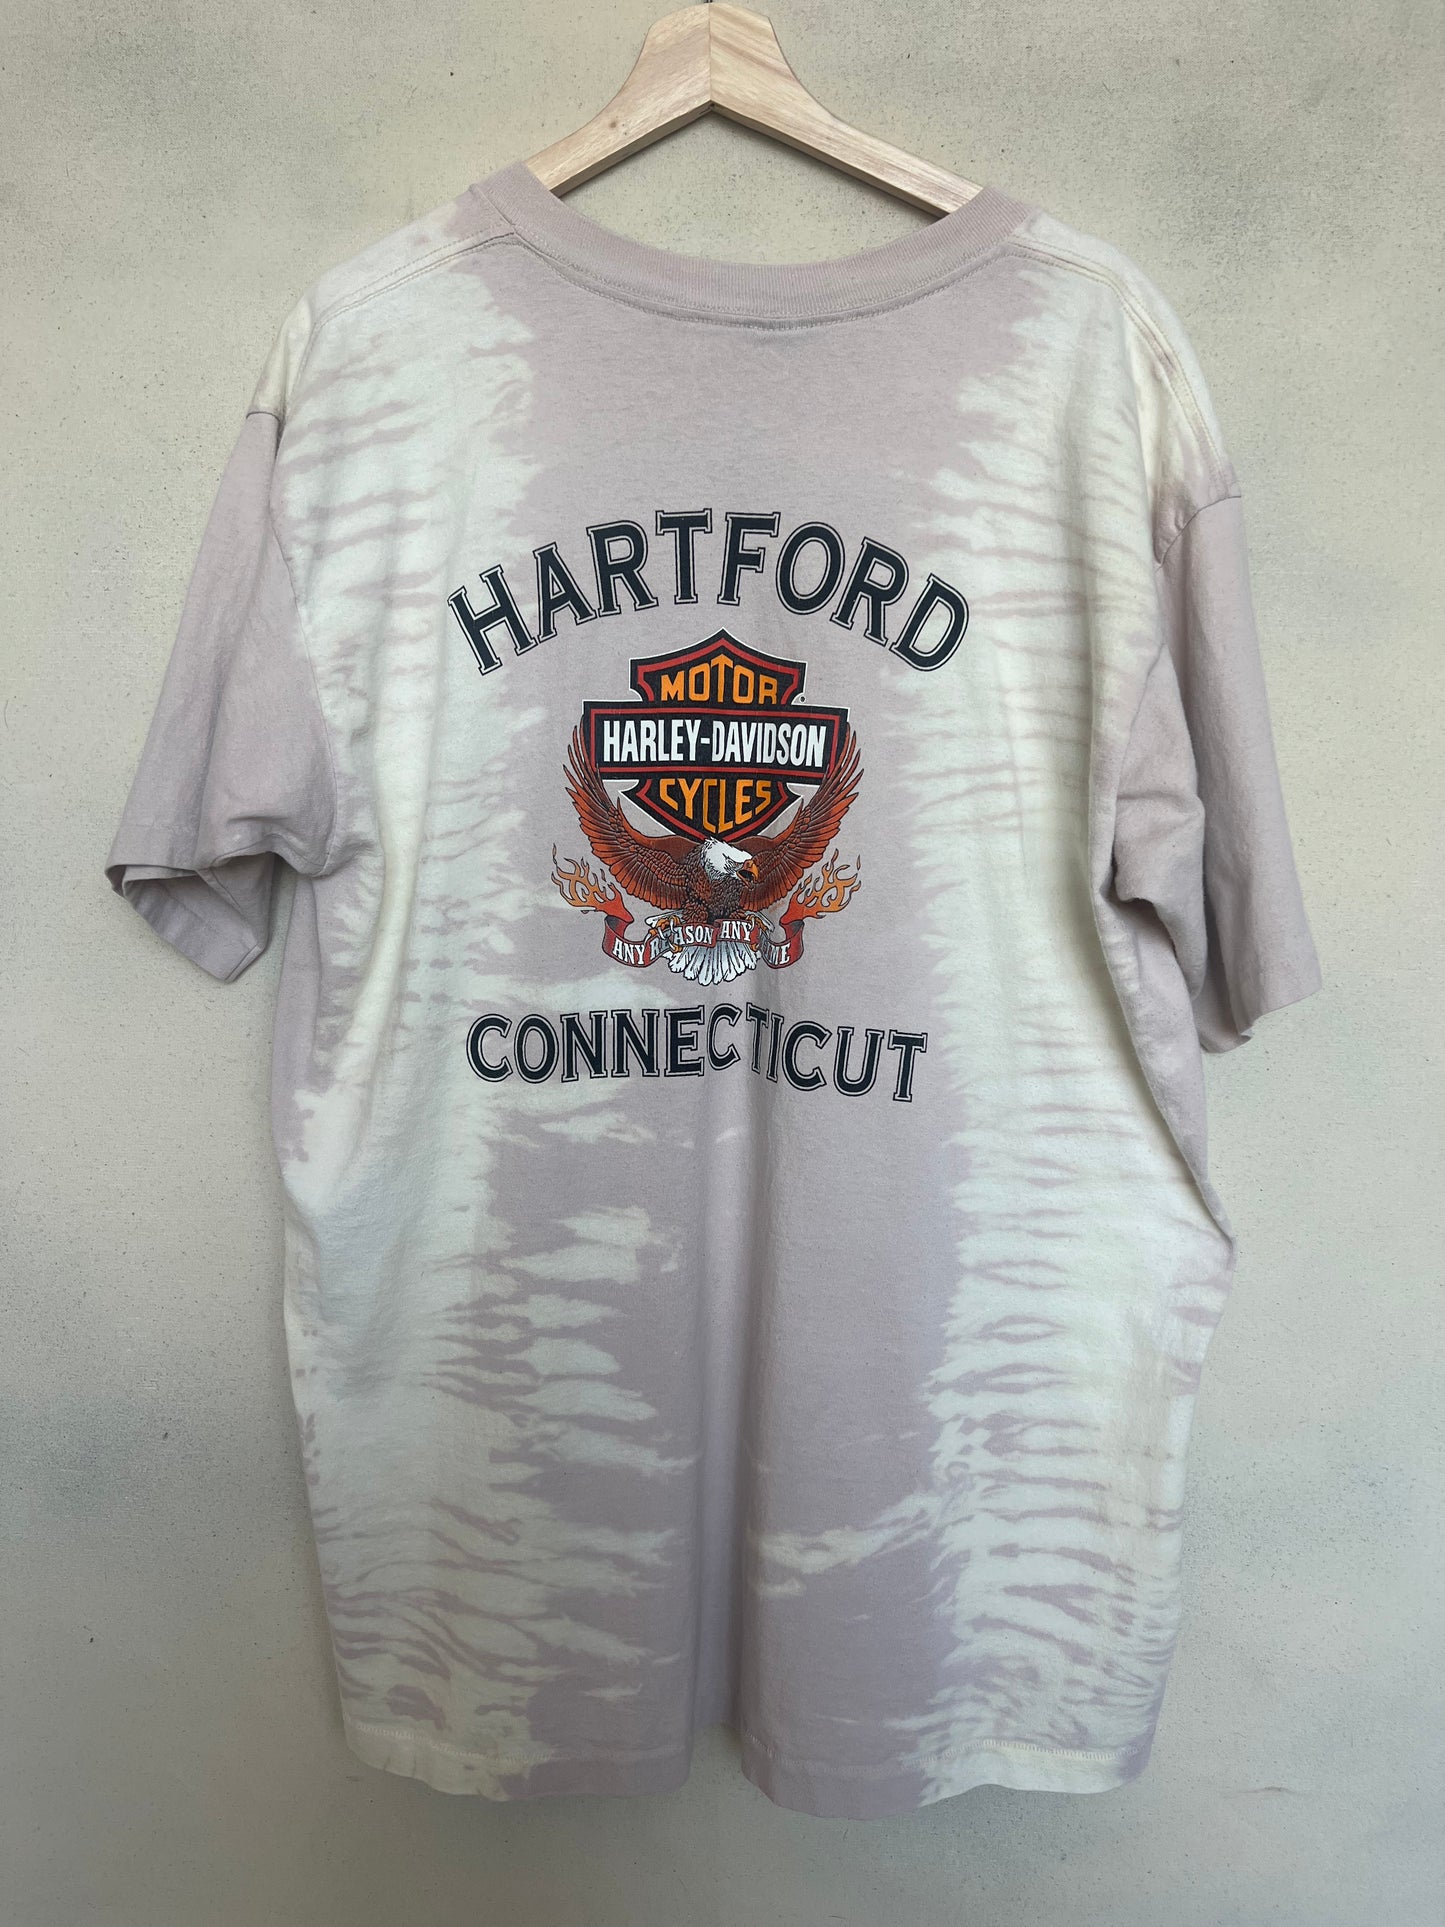 Harley Davidson Hartford Connecticut tee